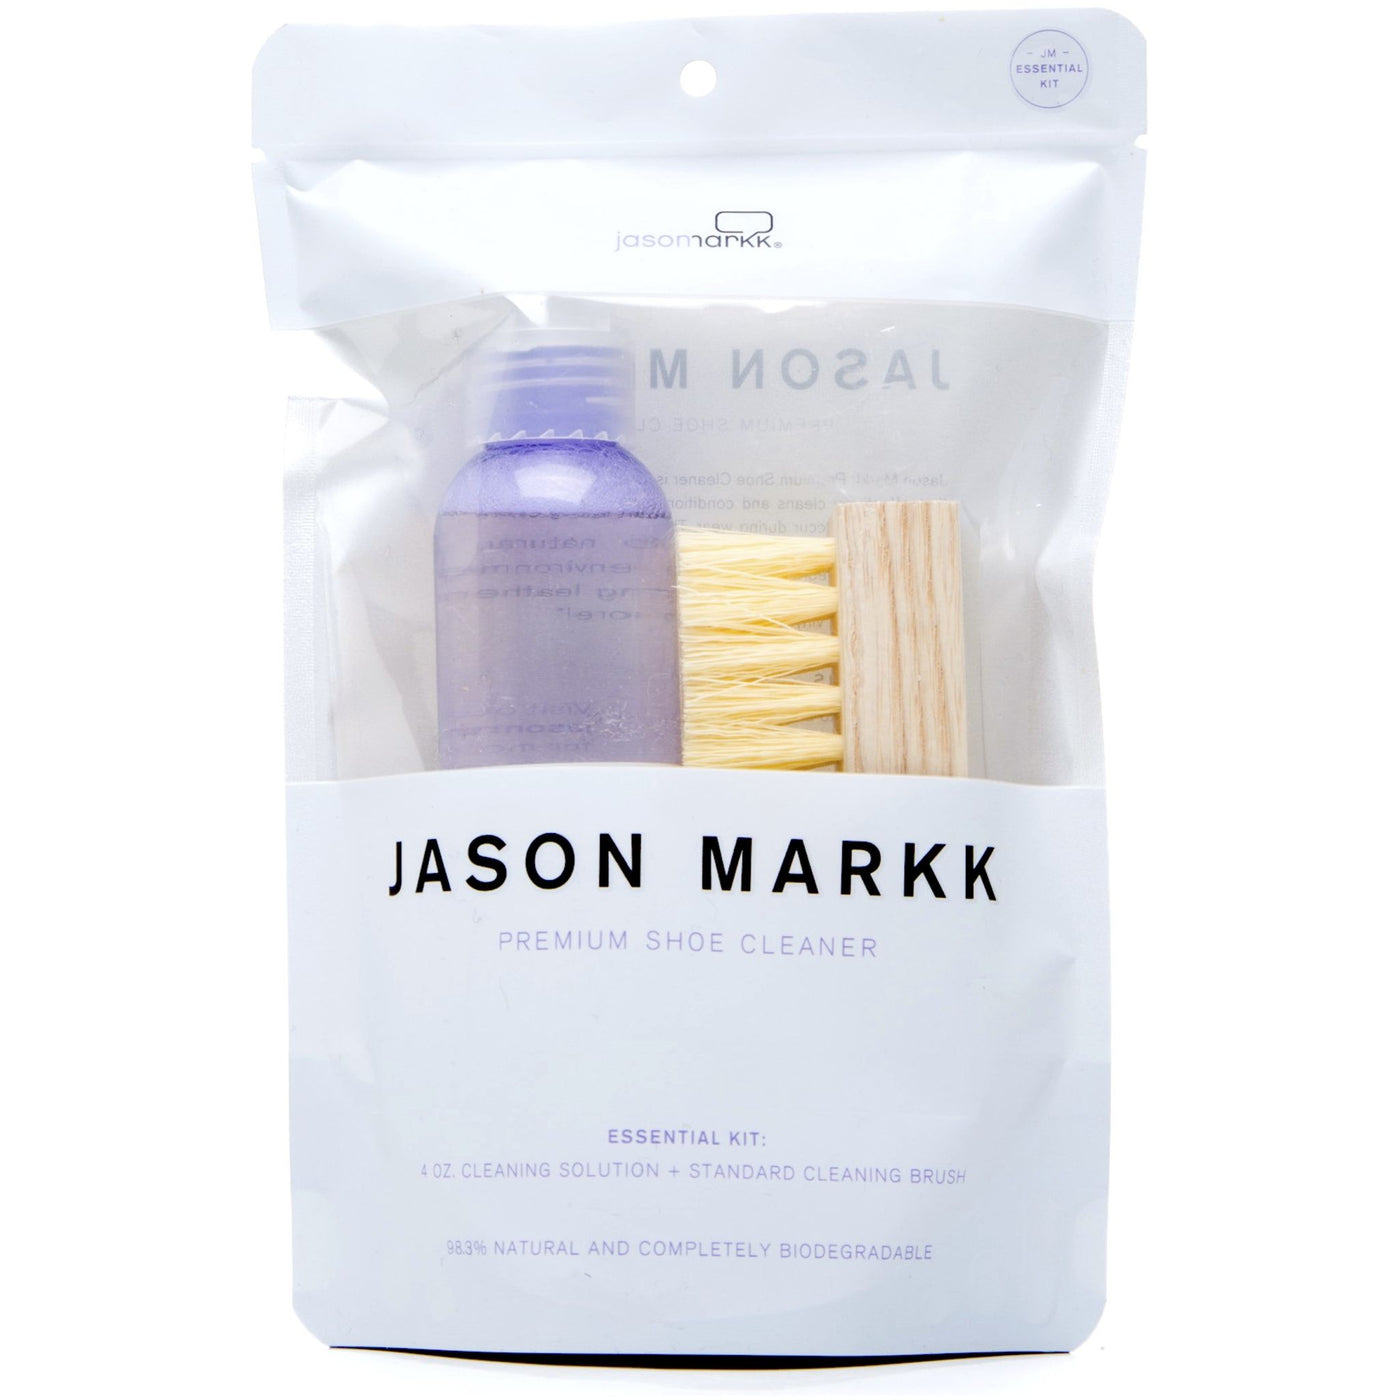 Jason Markk 4oz Premium Shoe Cleaning Kit